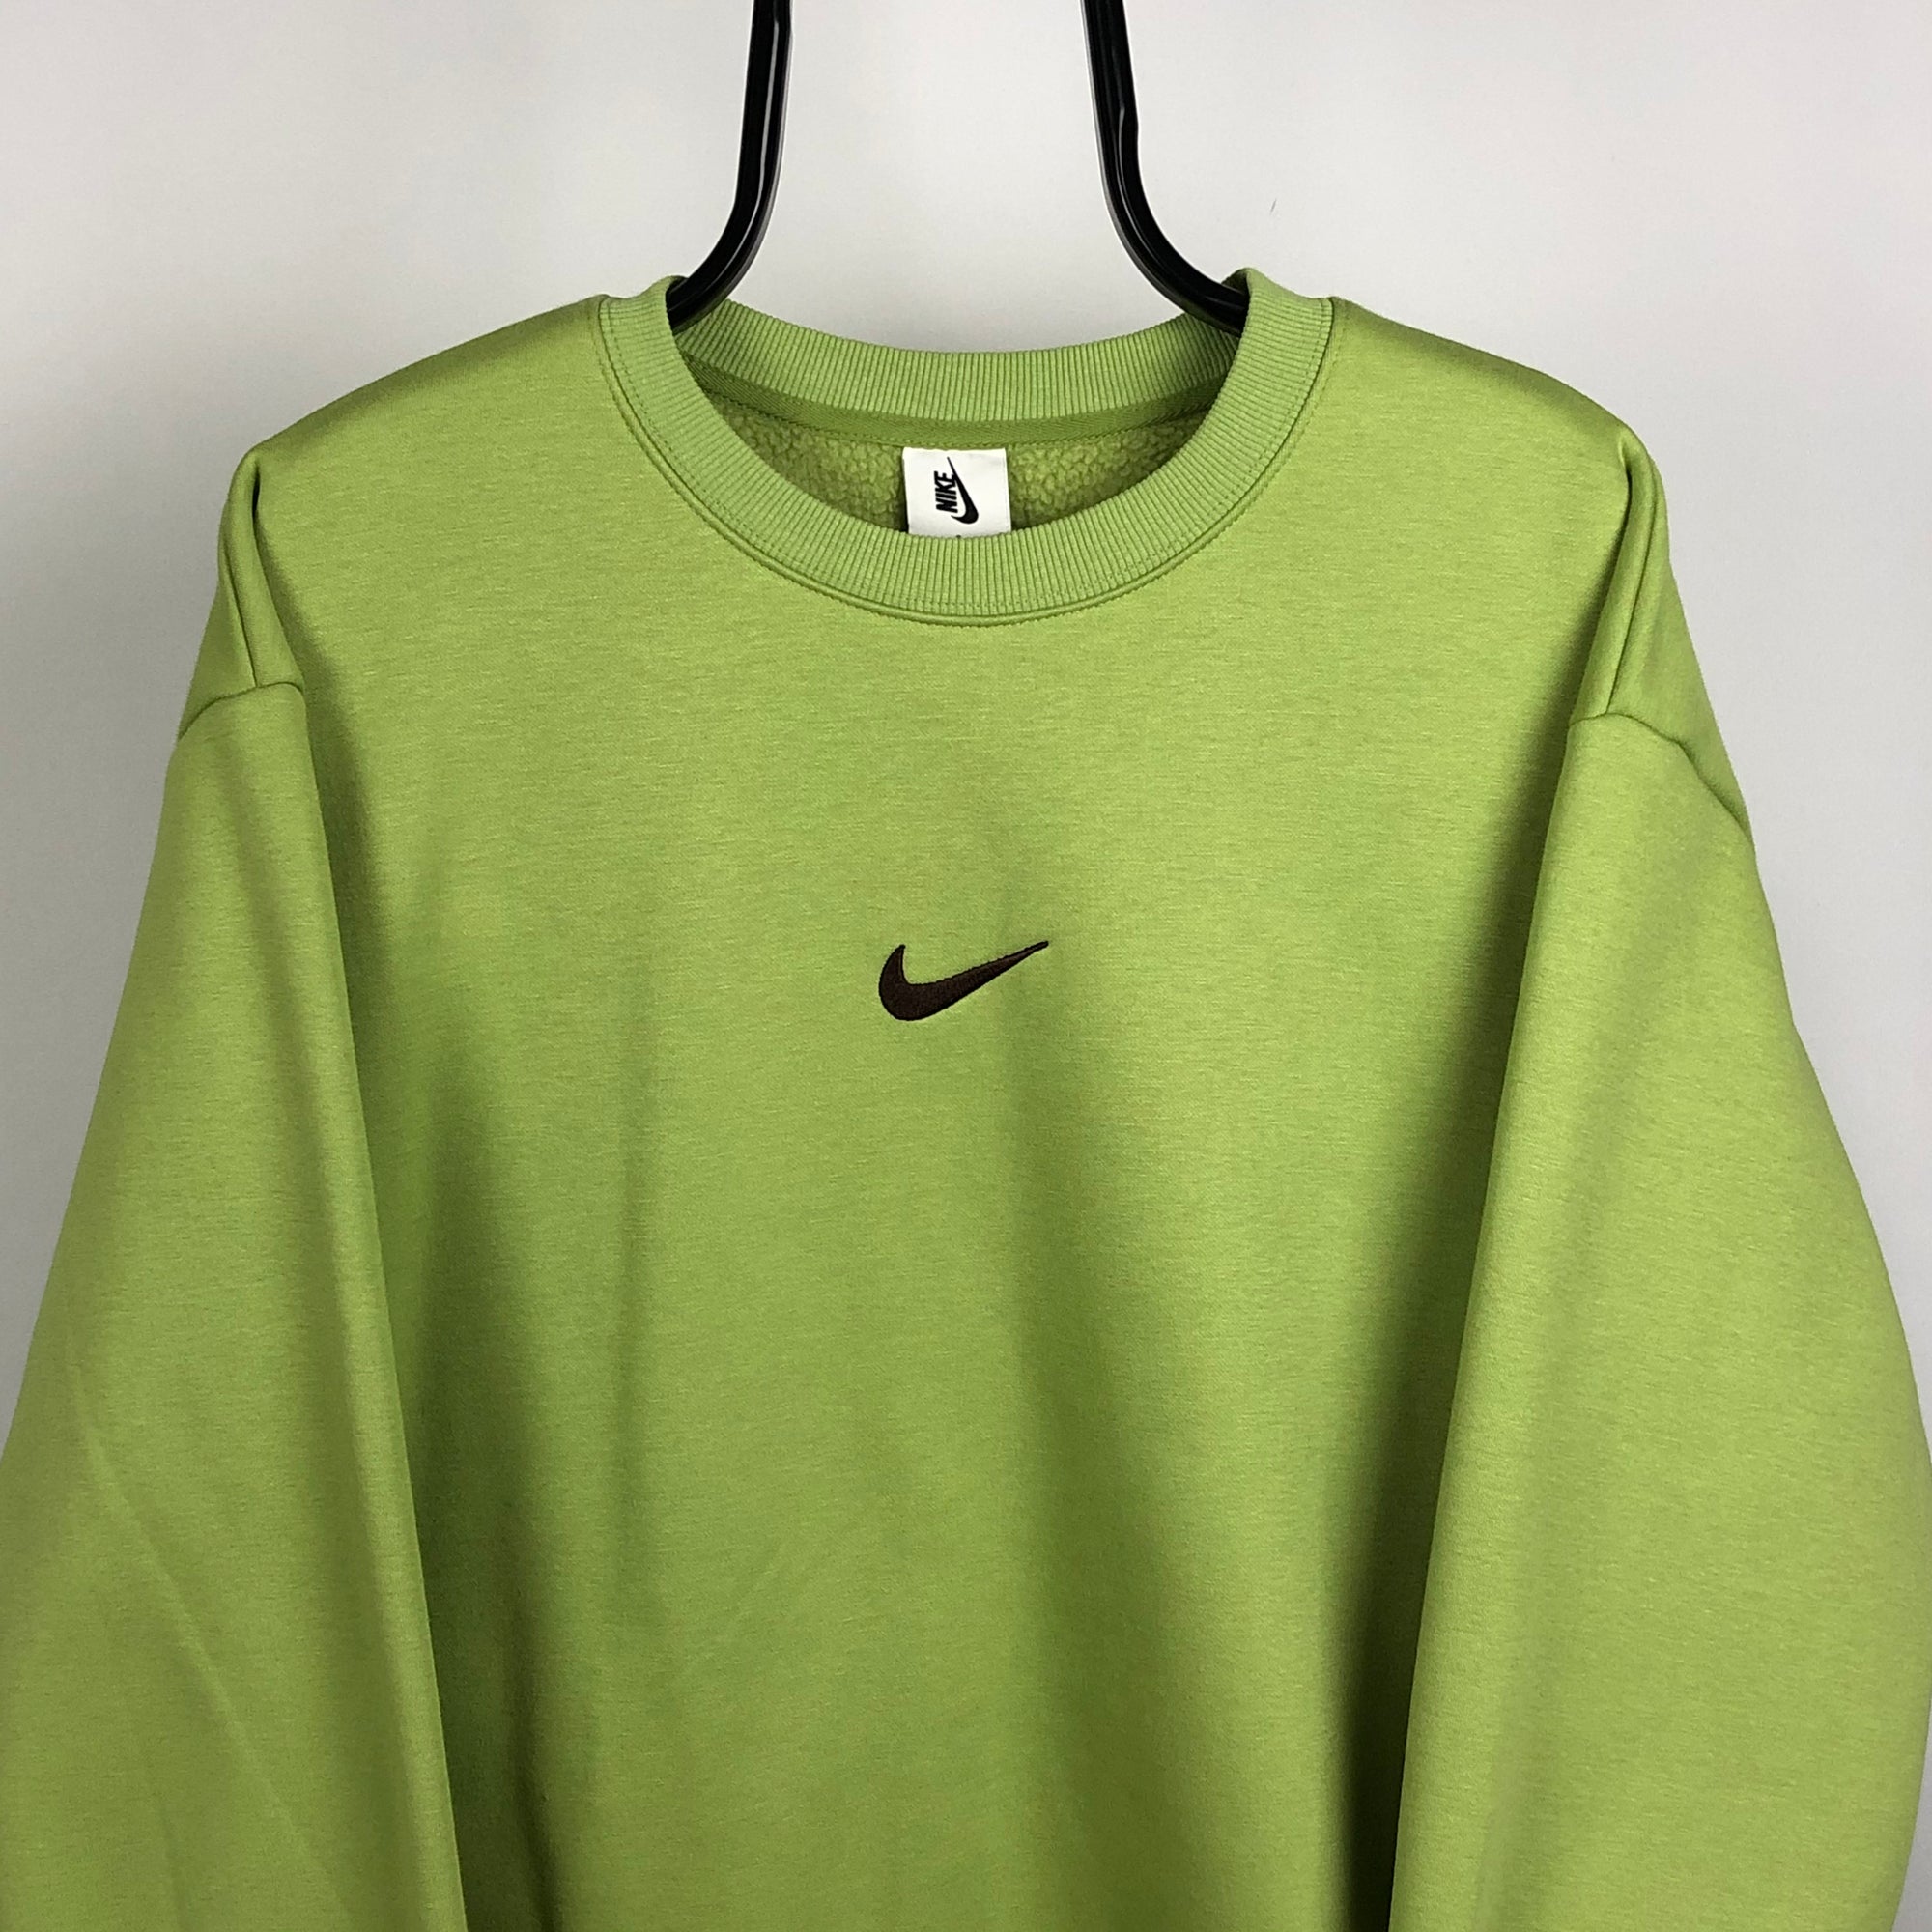 Nike Embroidered Centre Swoosh Sweatshirt in Avocado Green - Men's Medium/Women's Large